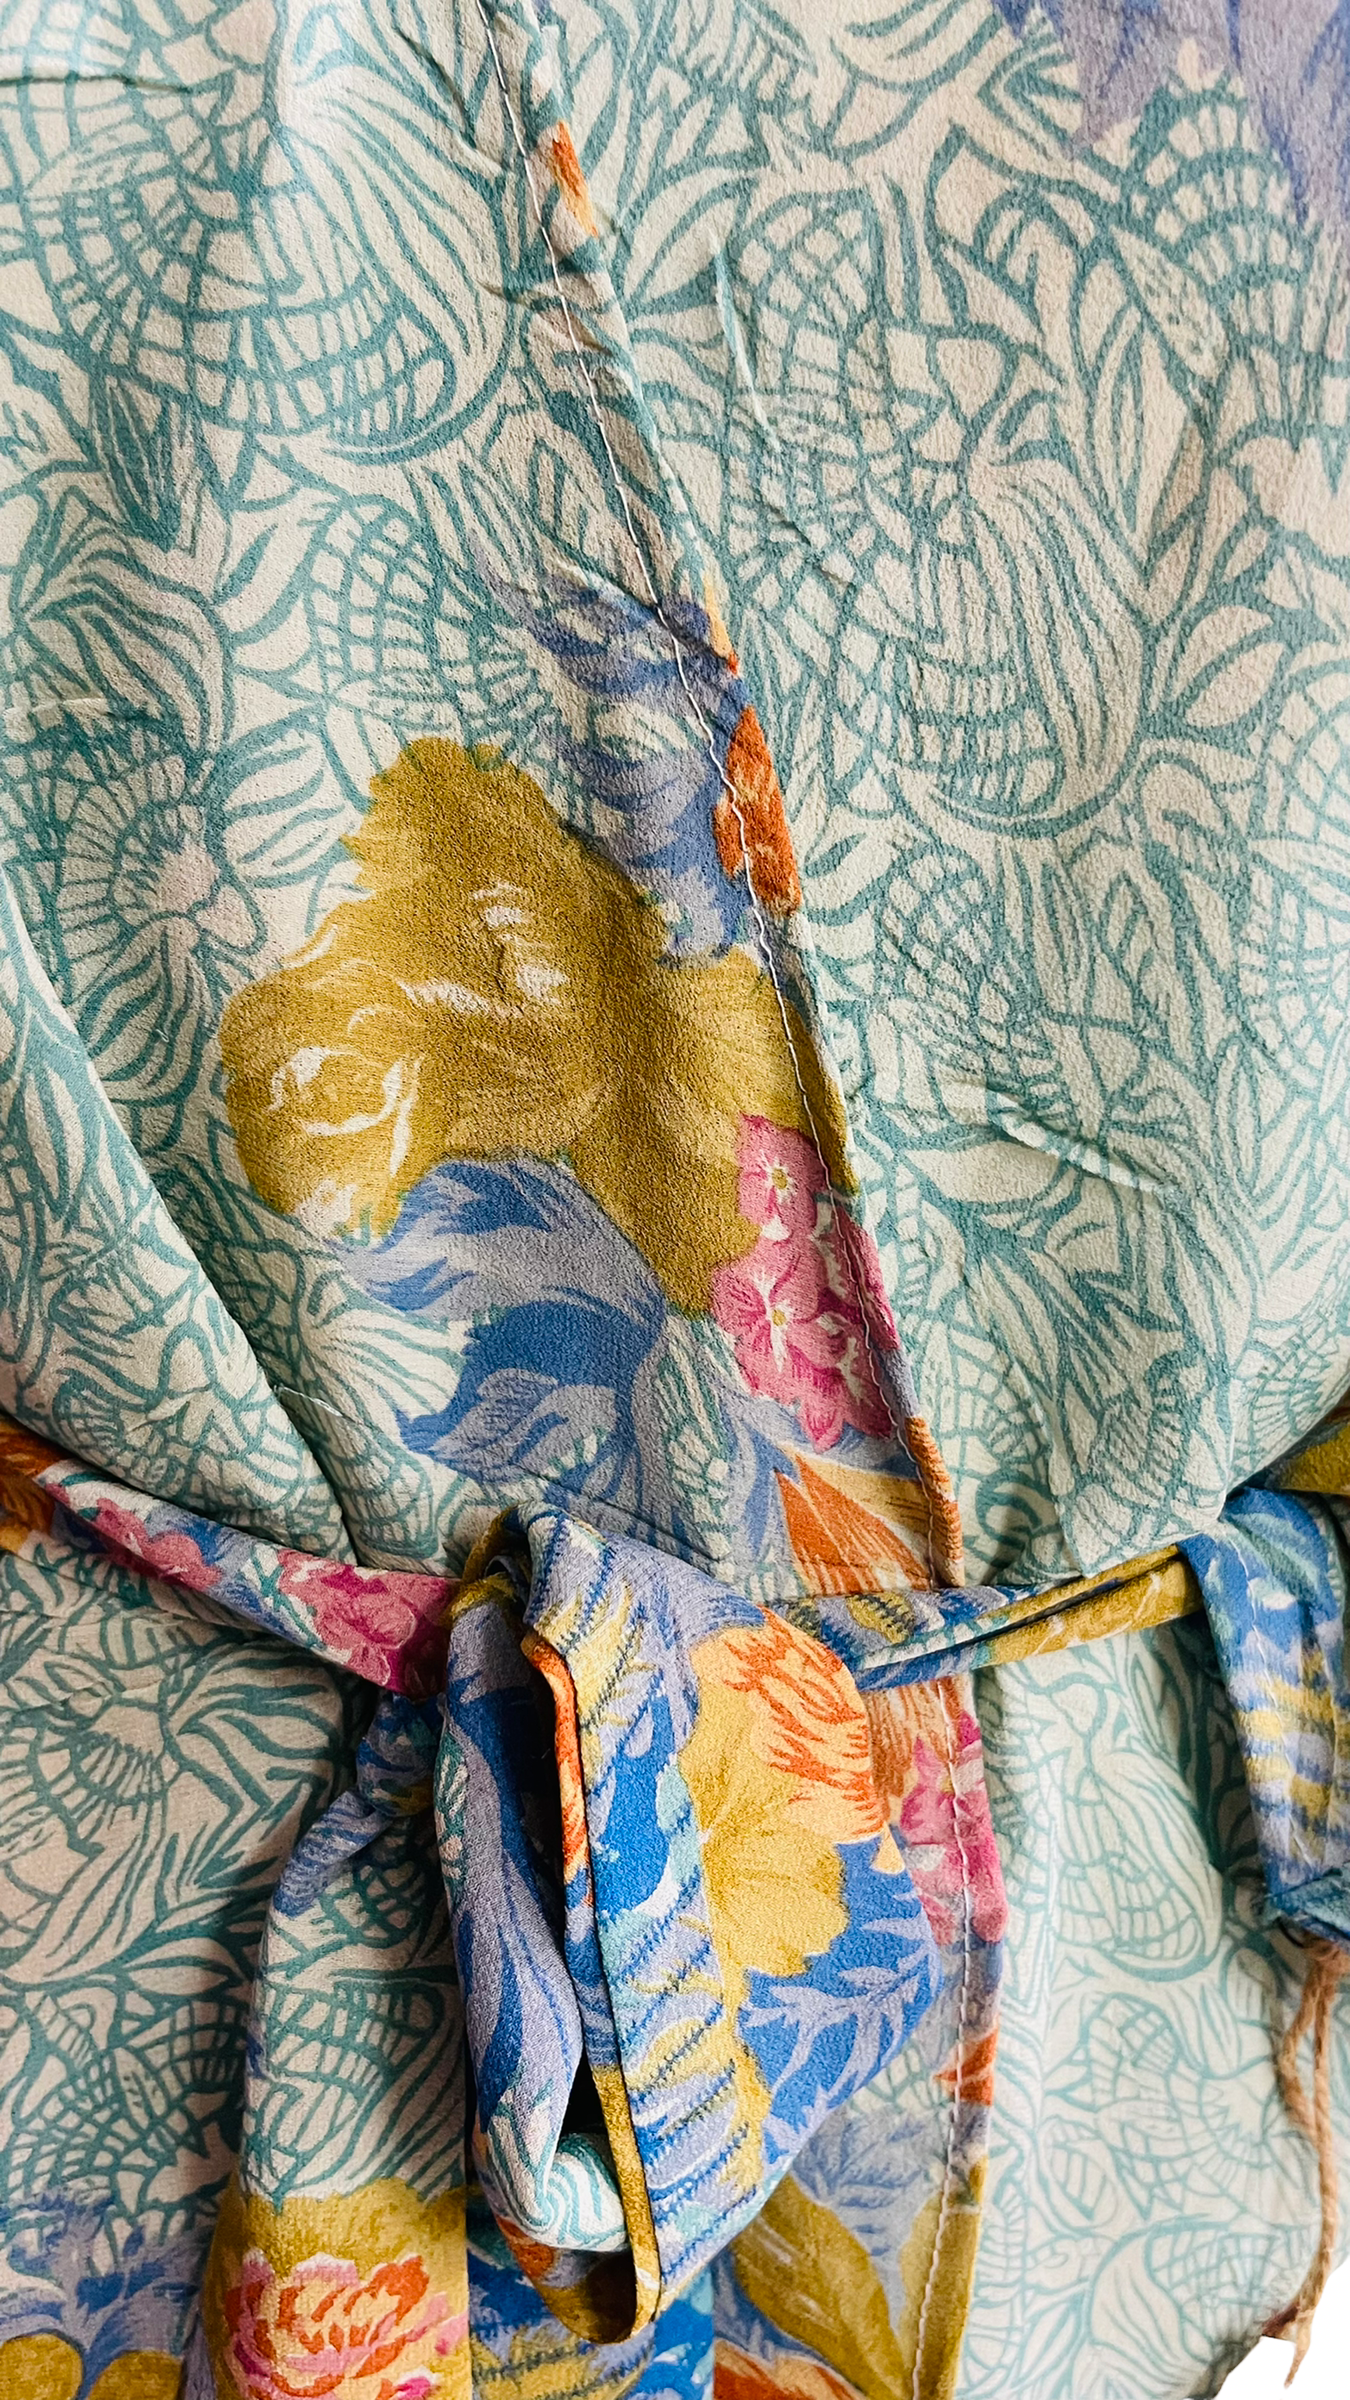 Fox Sheer Avatar Pure Silk Kimono-Sleeved Jacket with Belt